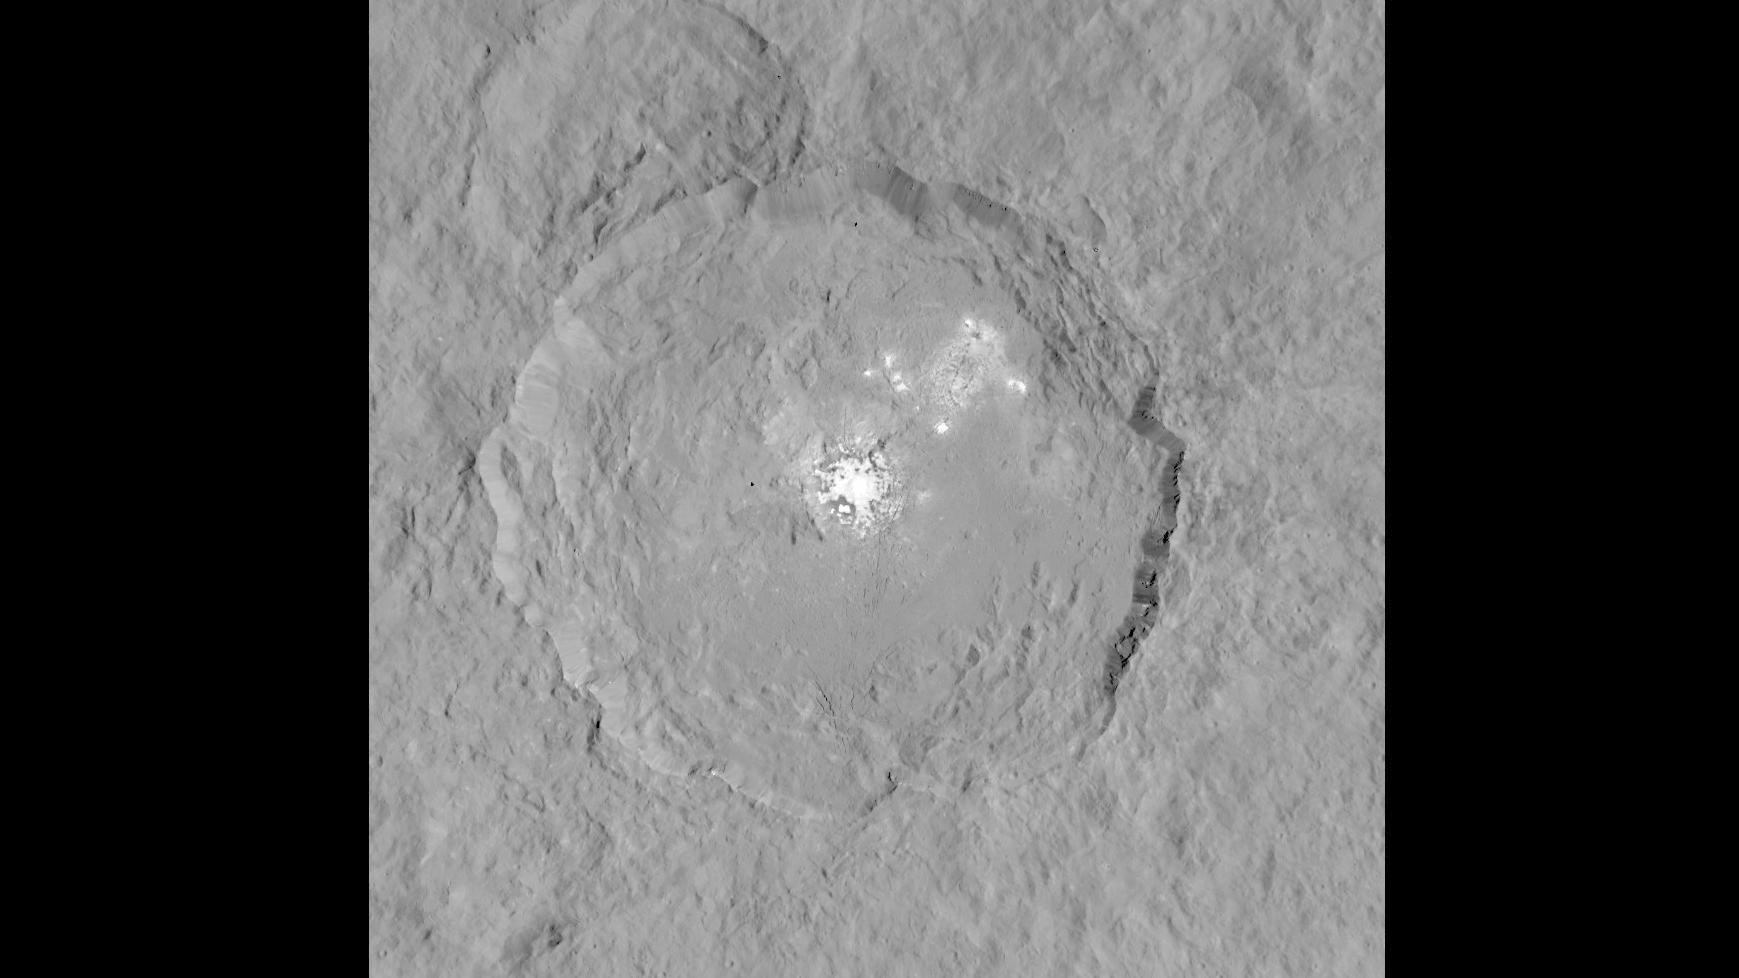 Bright spots in the interior of Occator Crater